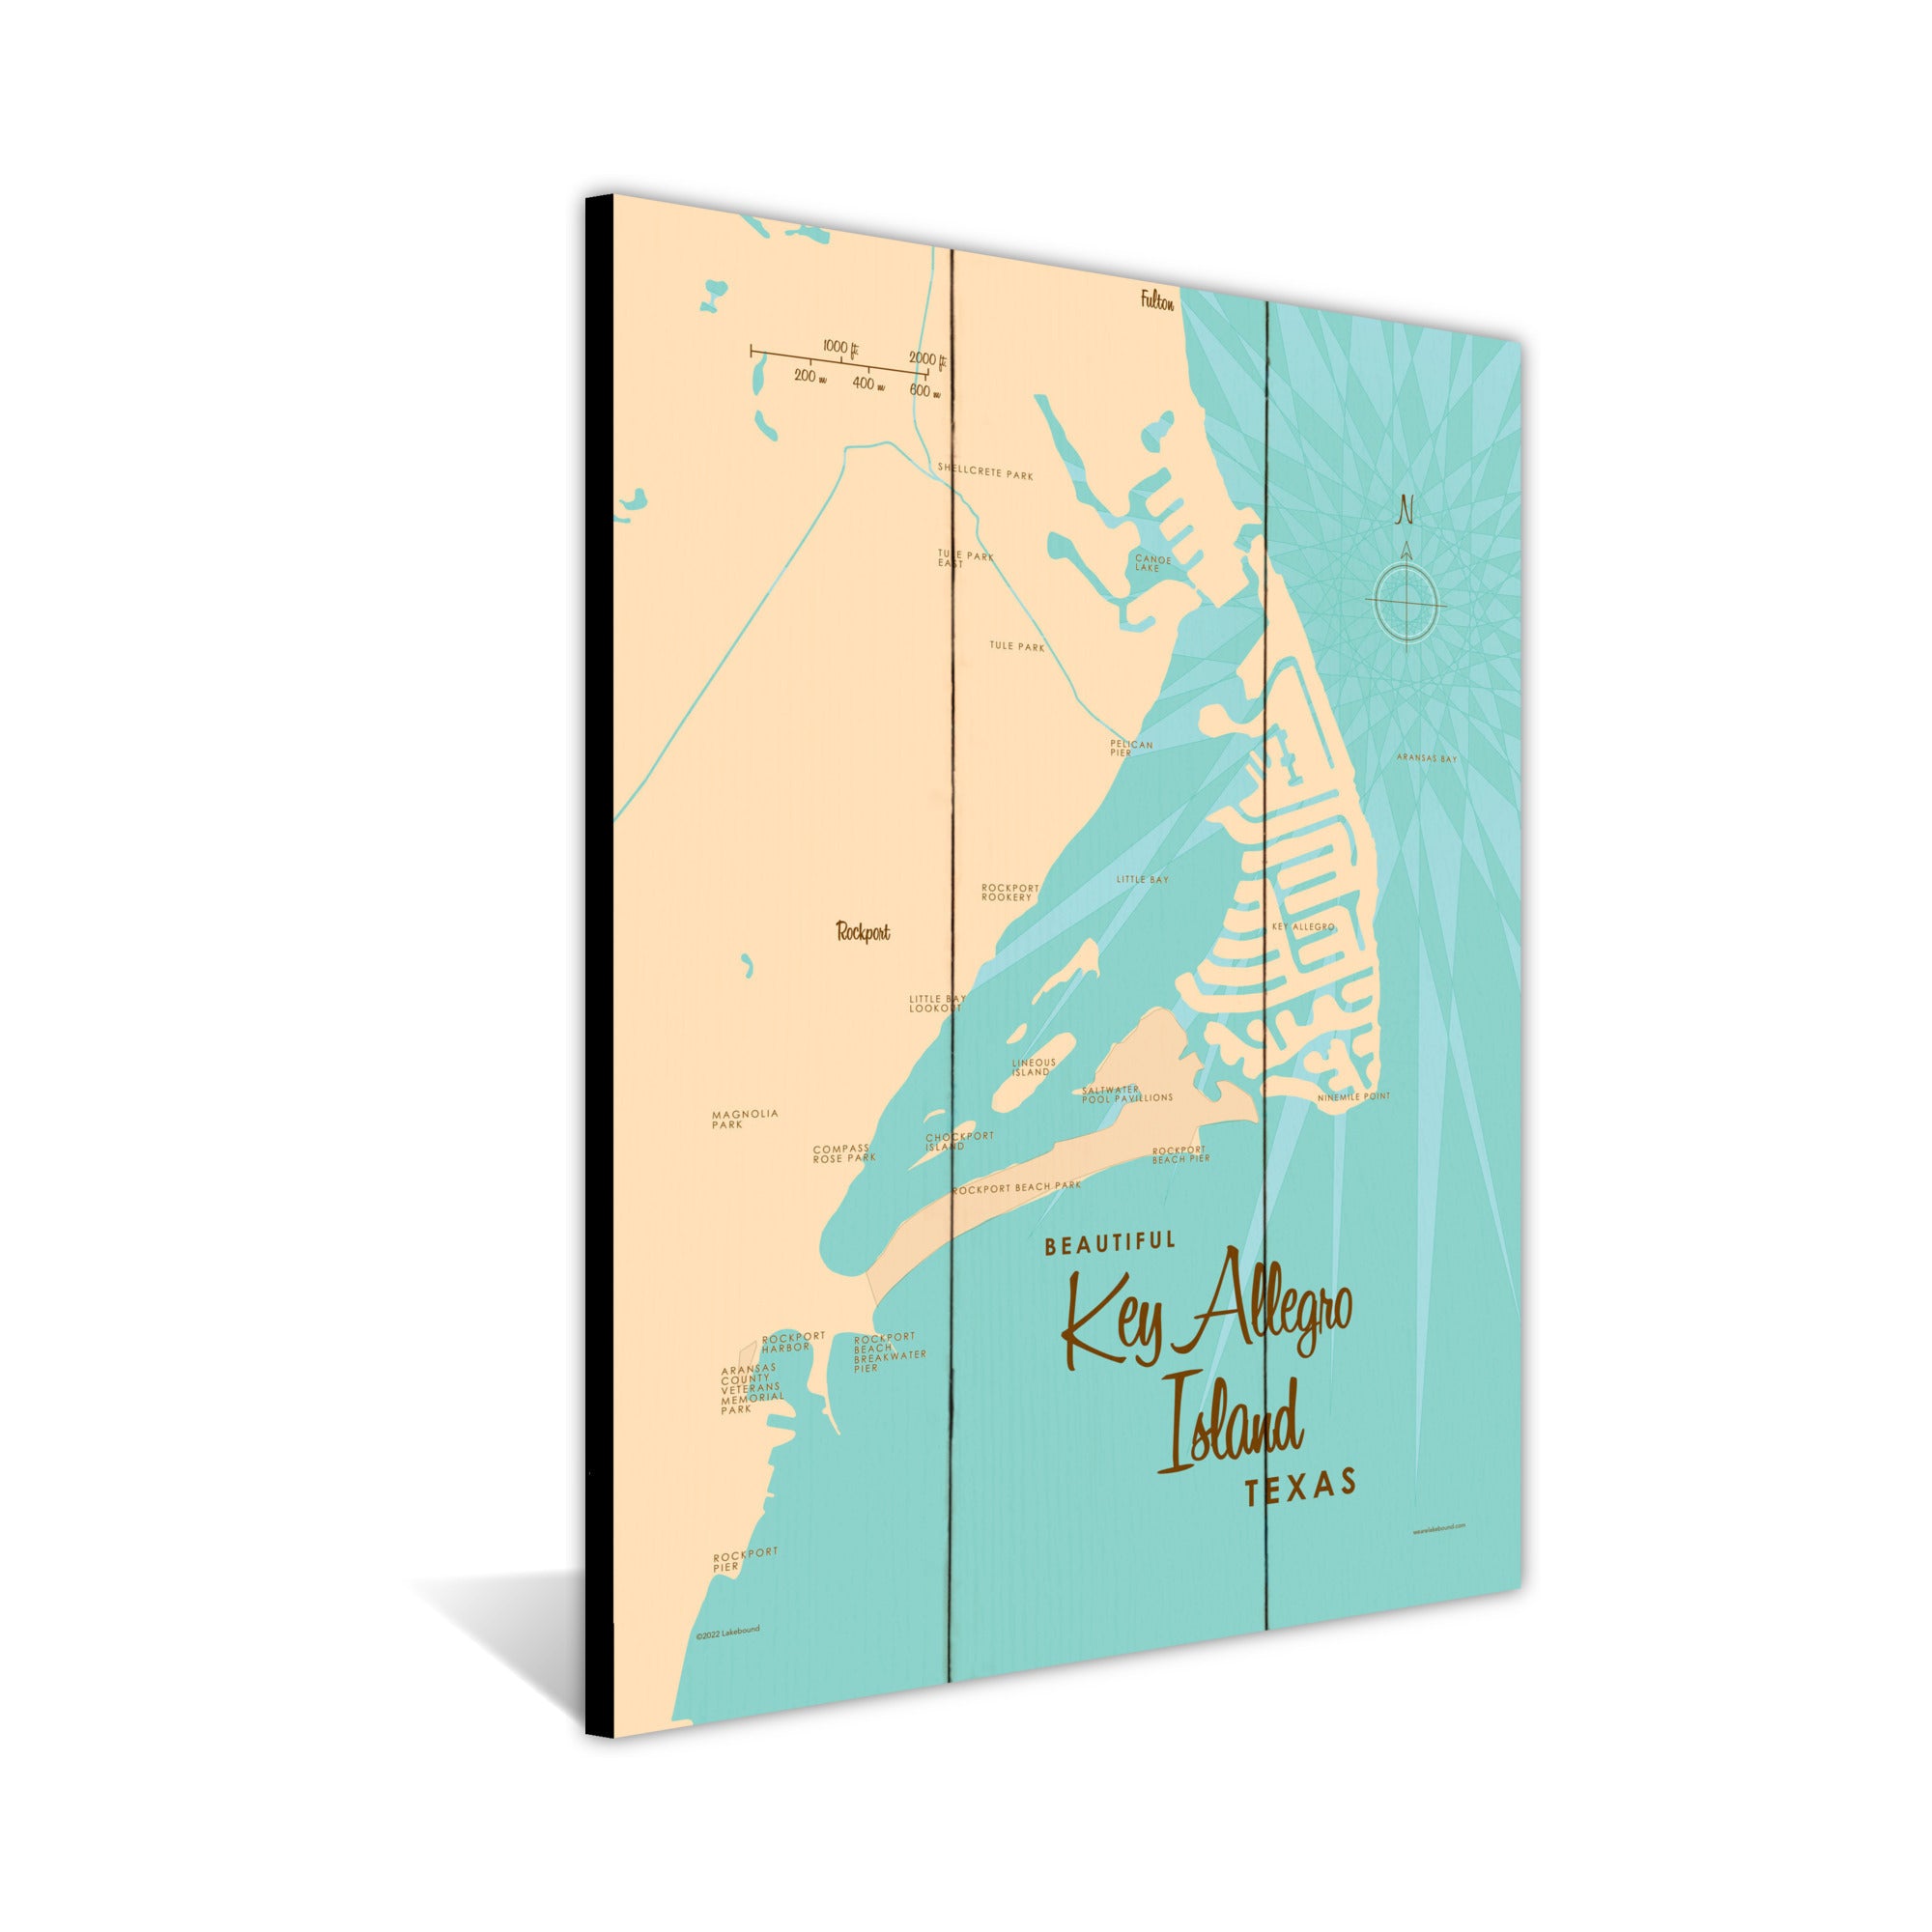 Key Allegro Island Texas, Wood Sign Map Art